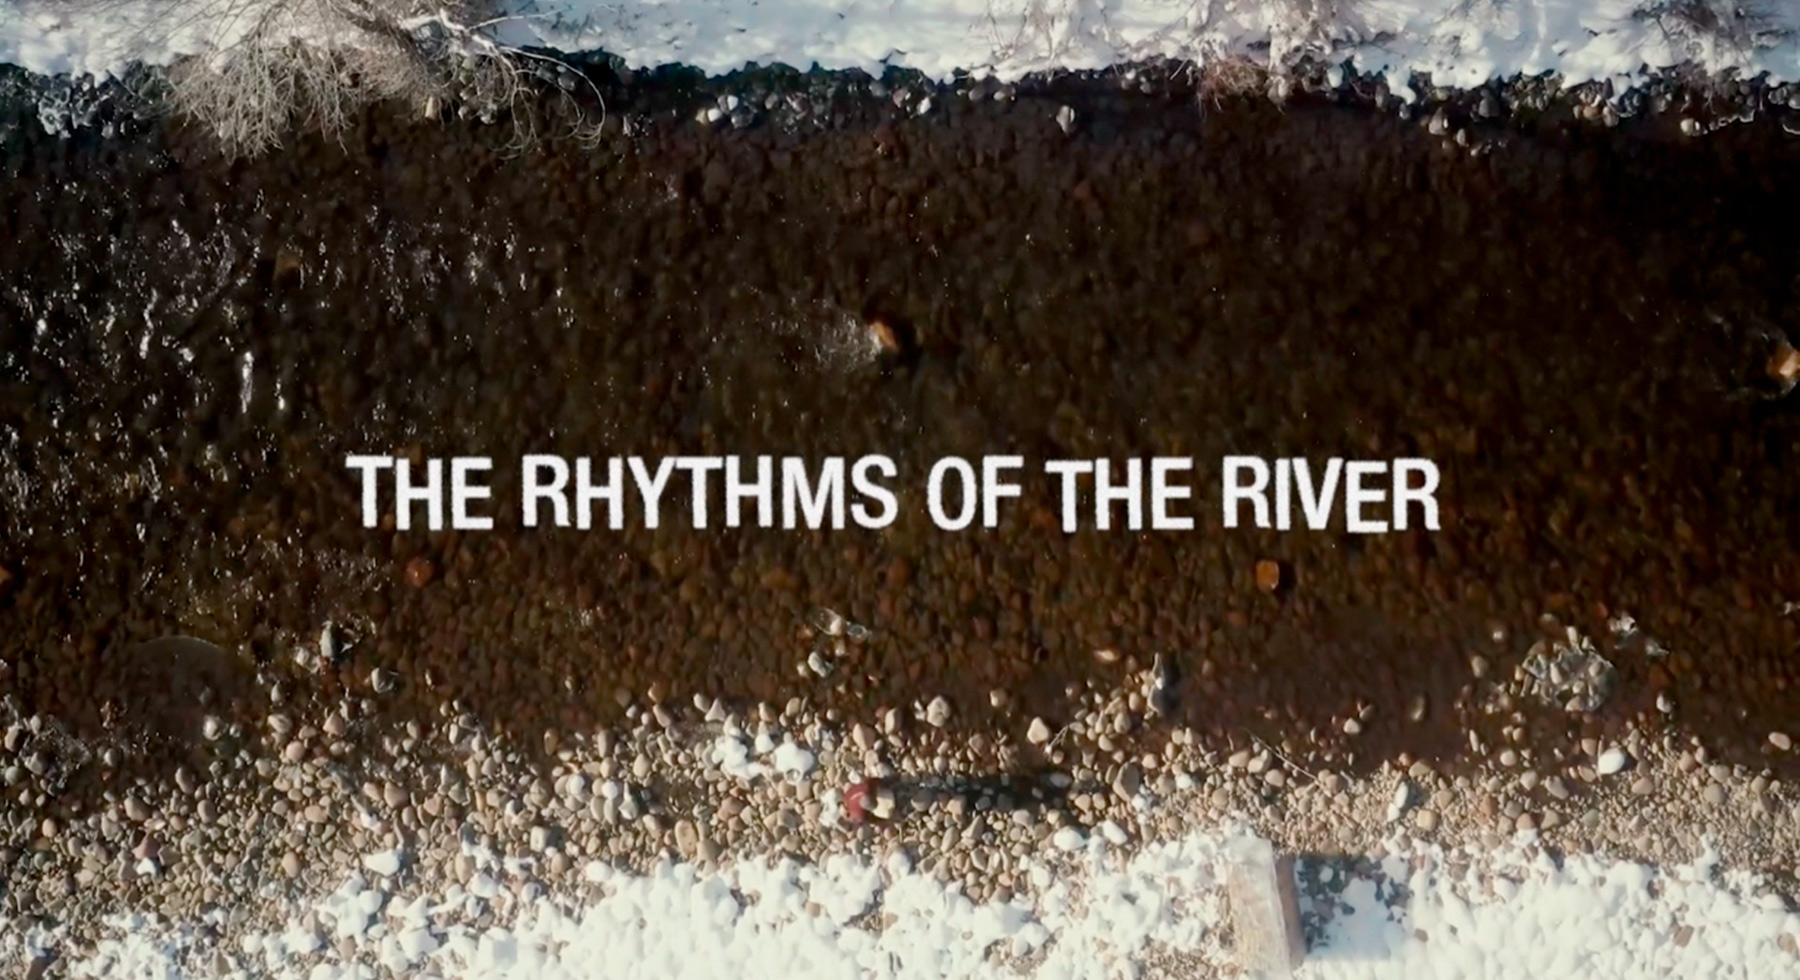 RHYTHMS OF THE RIVER
BEN MILLER